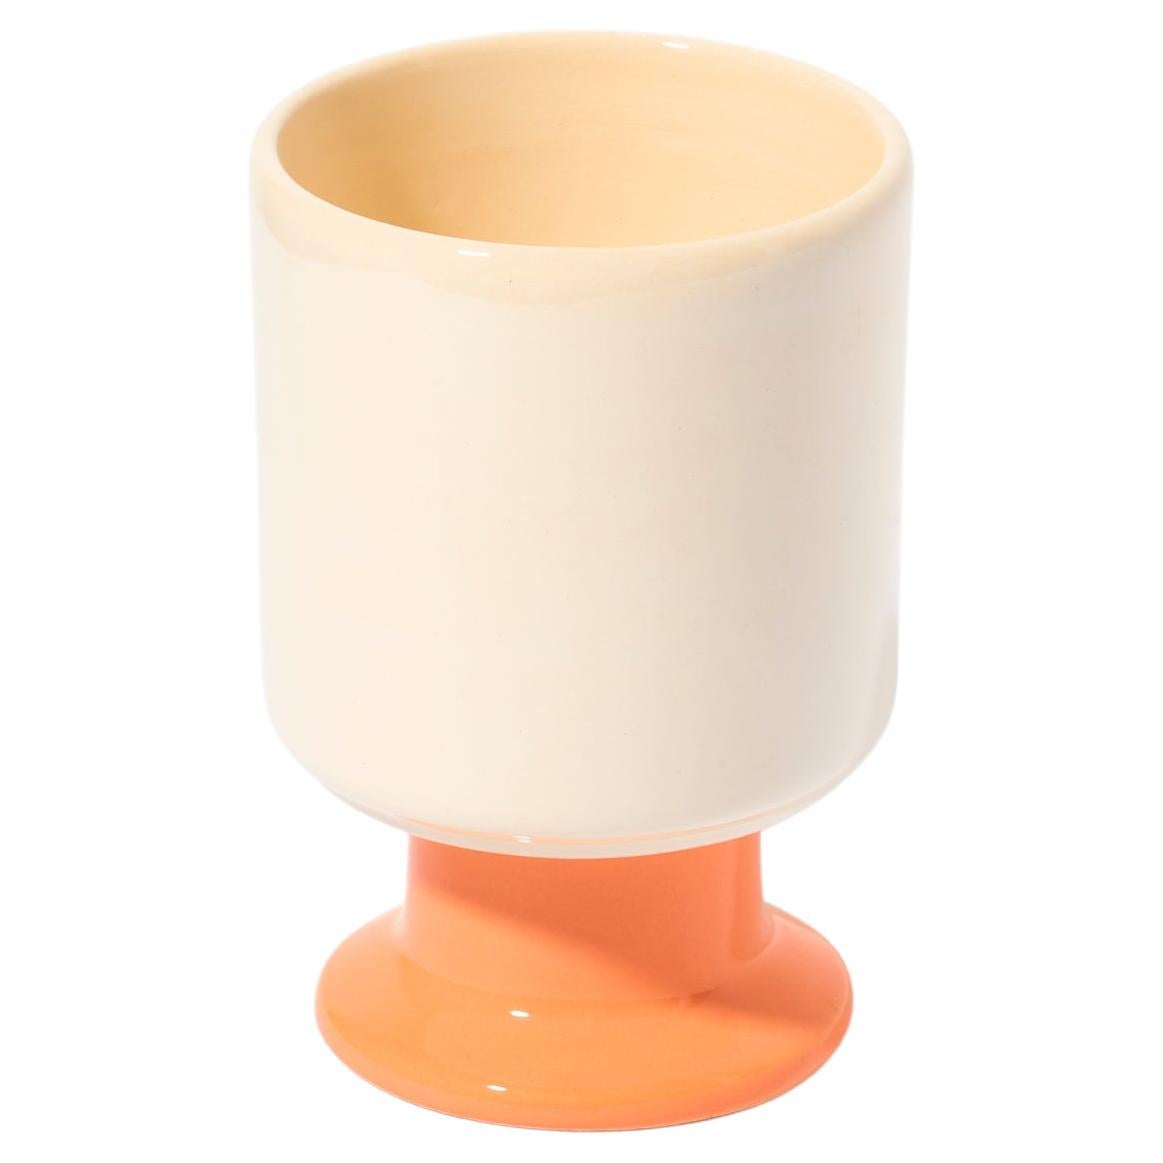 WIT Mug / Orange / Ecru by Malwina Konopacka For Sale